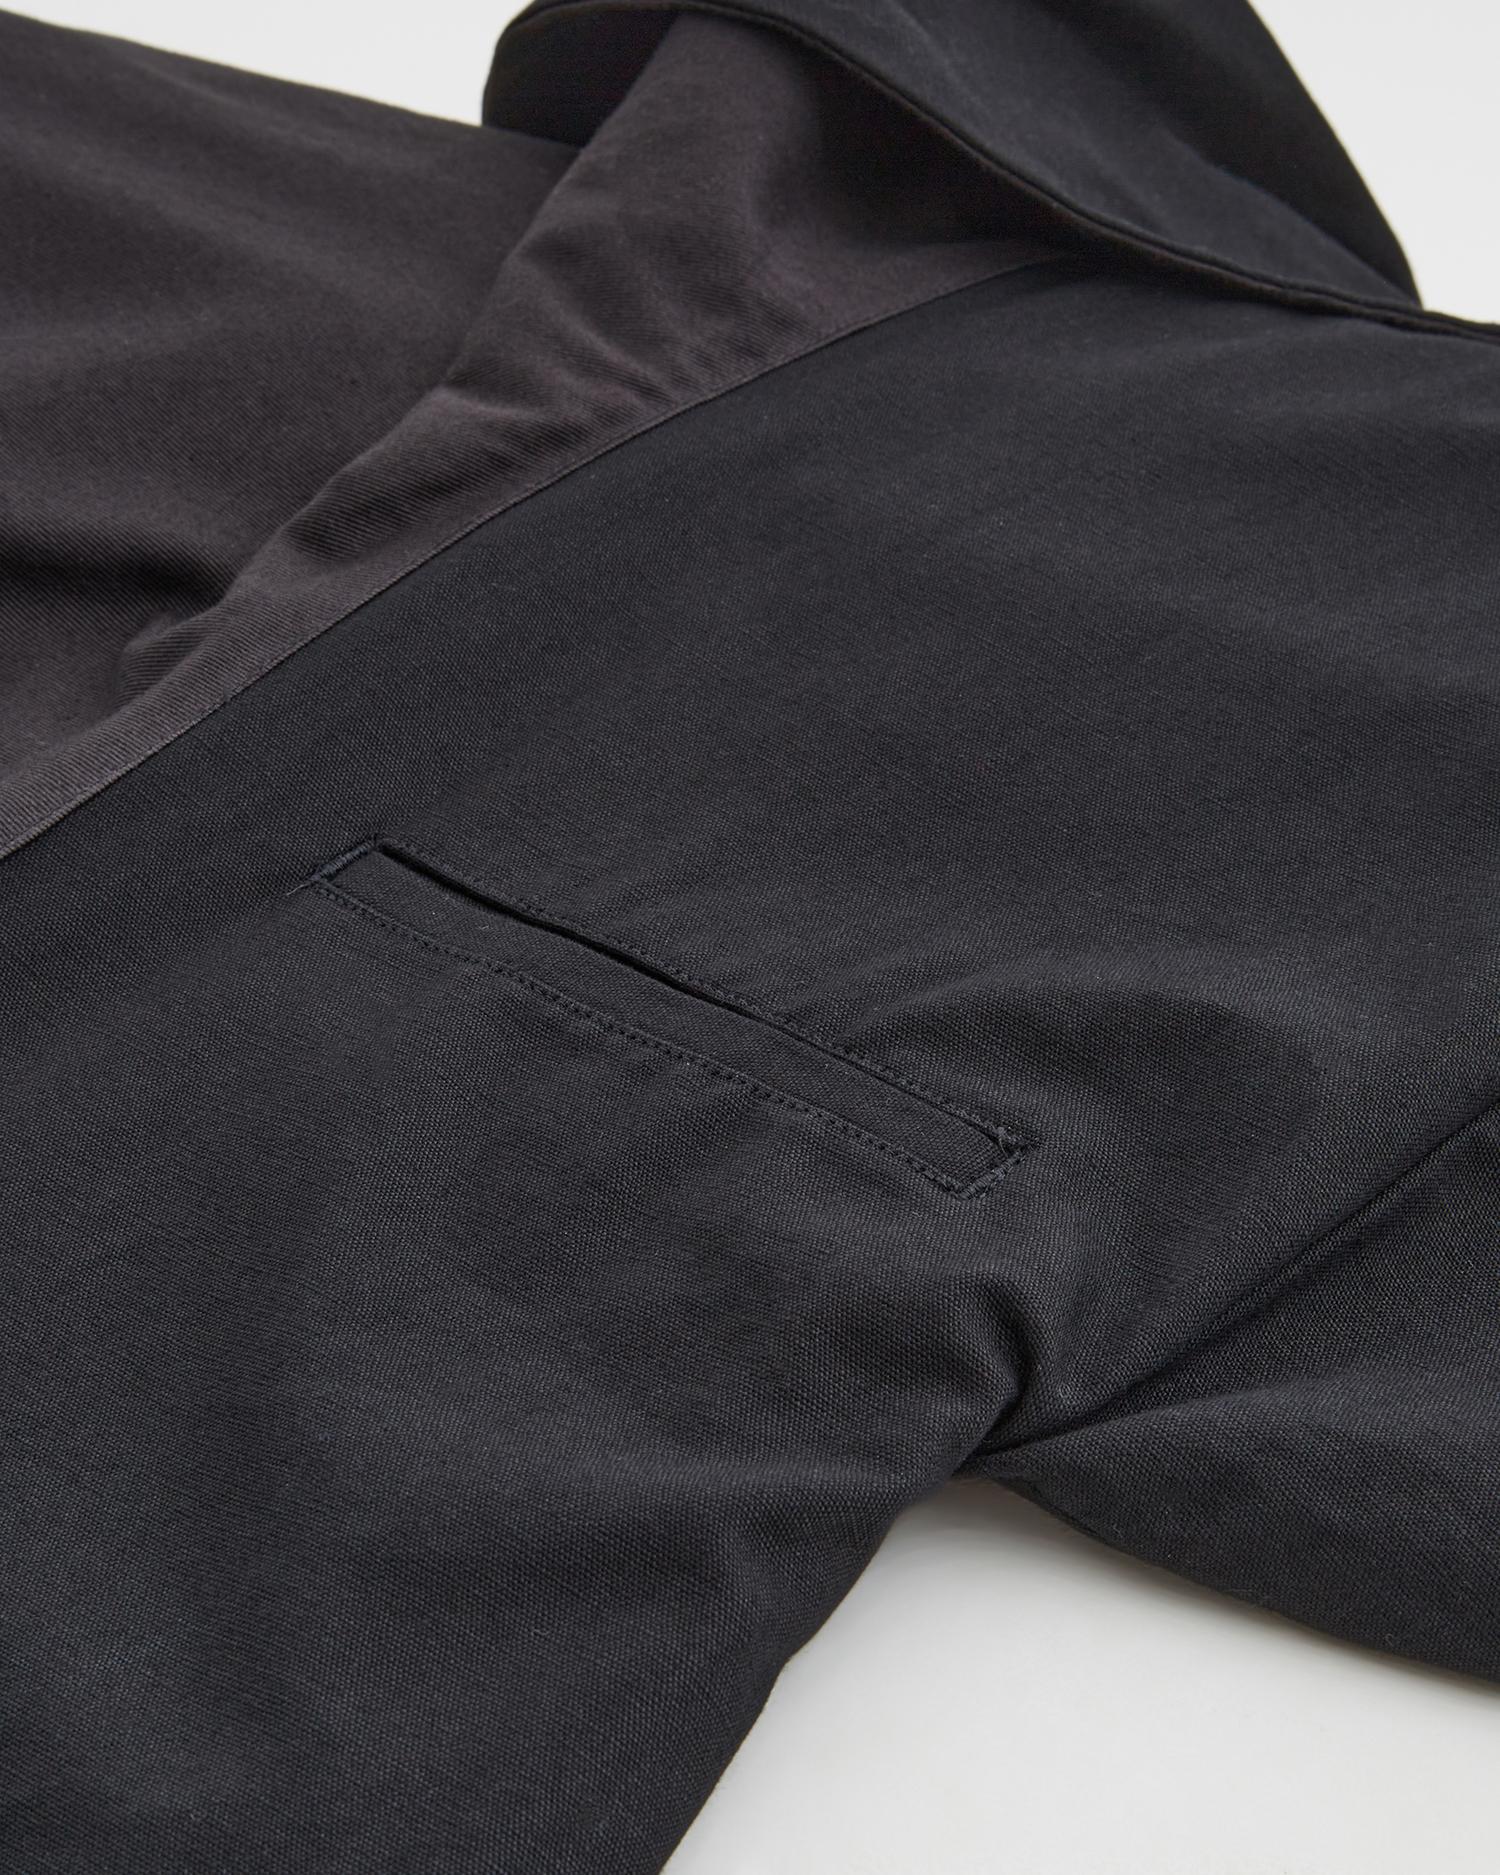 Yoshi Yamamoto Black cotton asymmetric cape, ss 2009 For Sale 4